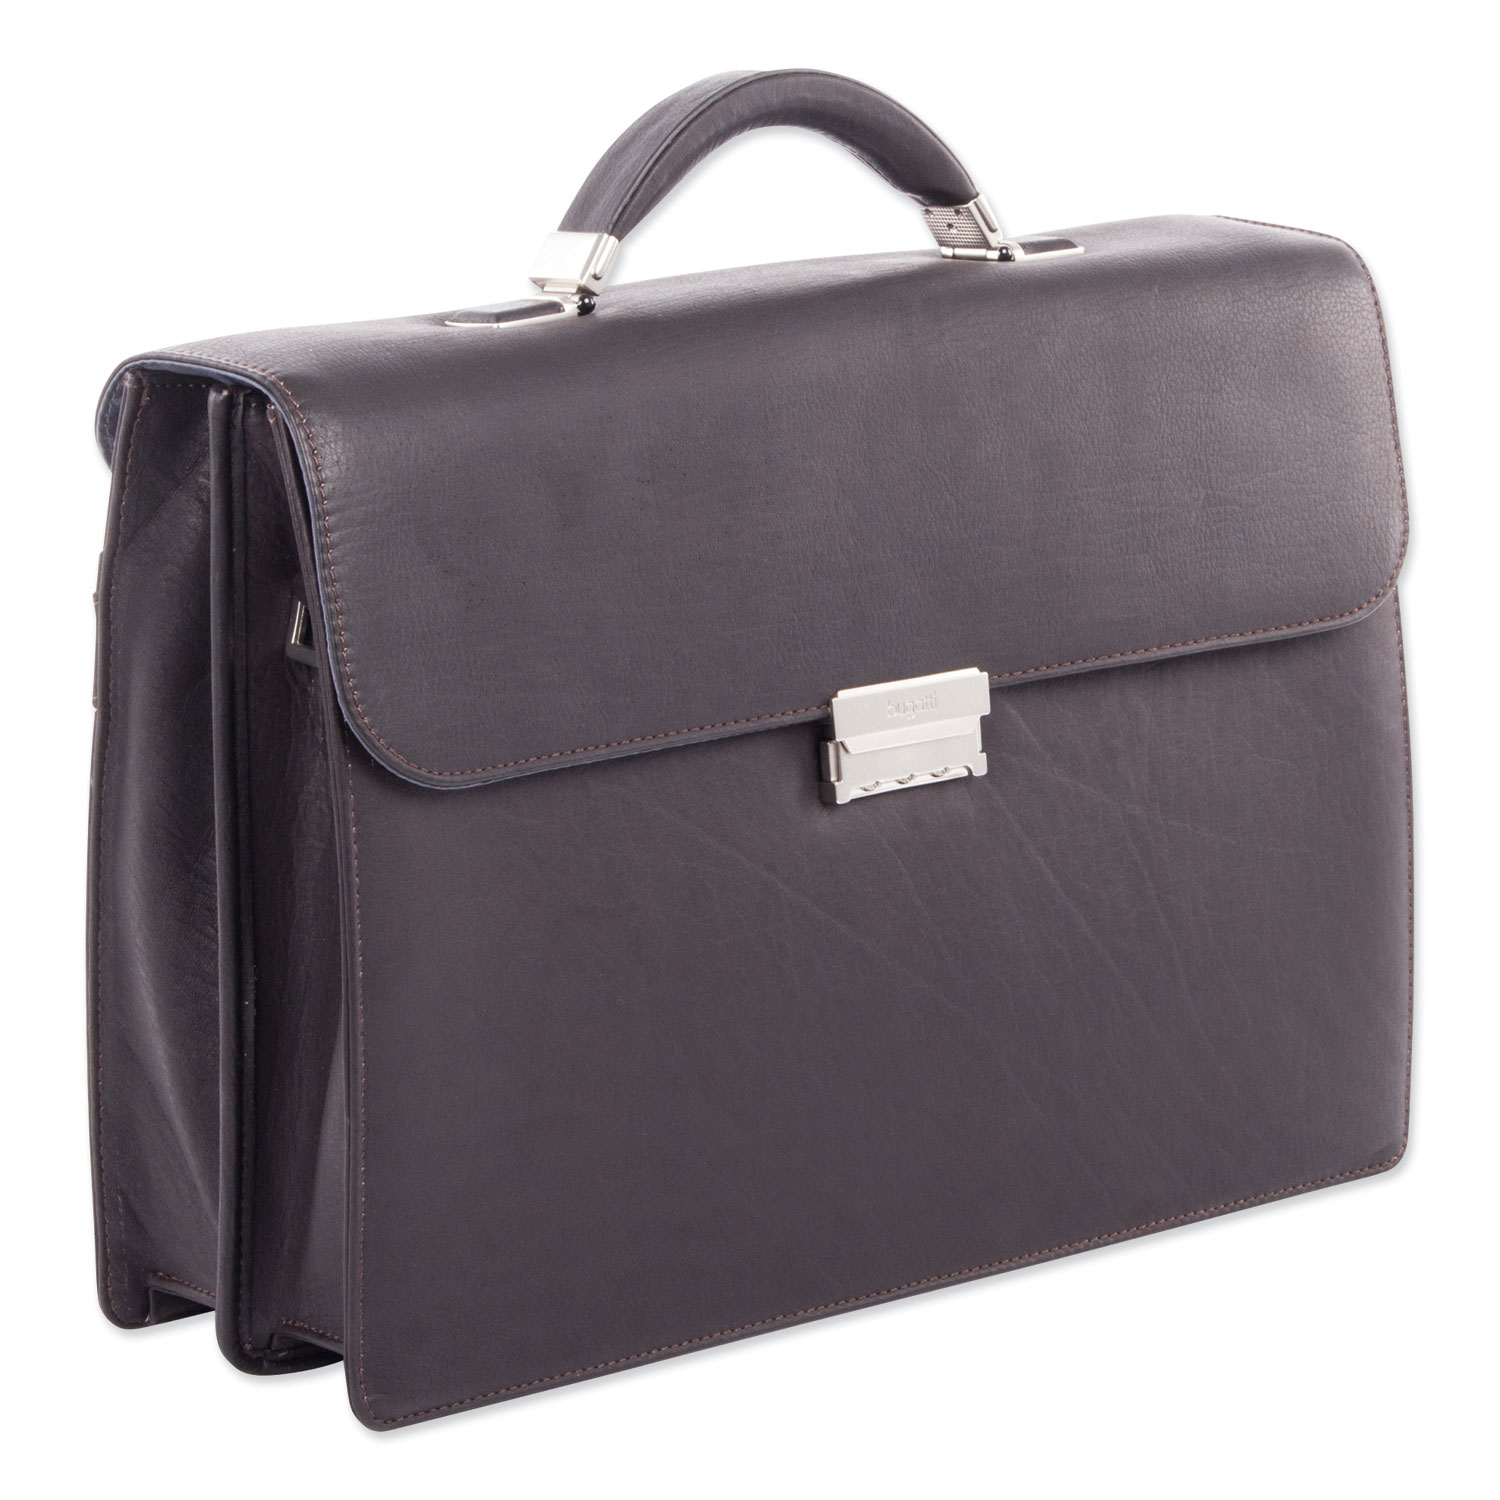 Milestone Briefcase, Holds Laptops, 15.6", 5" x 5" x 12", Brown